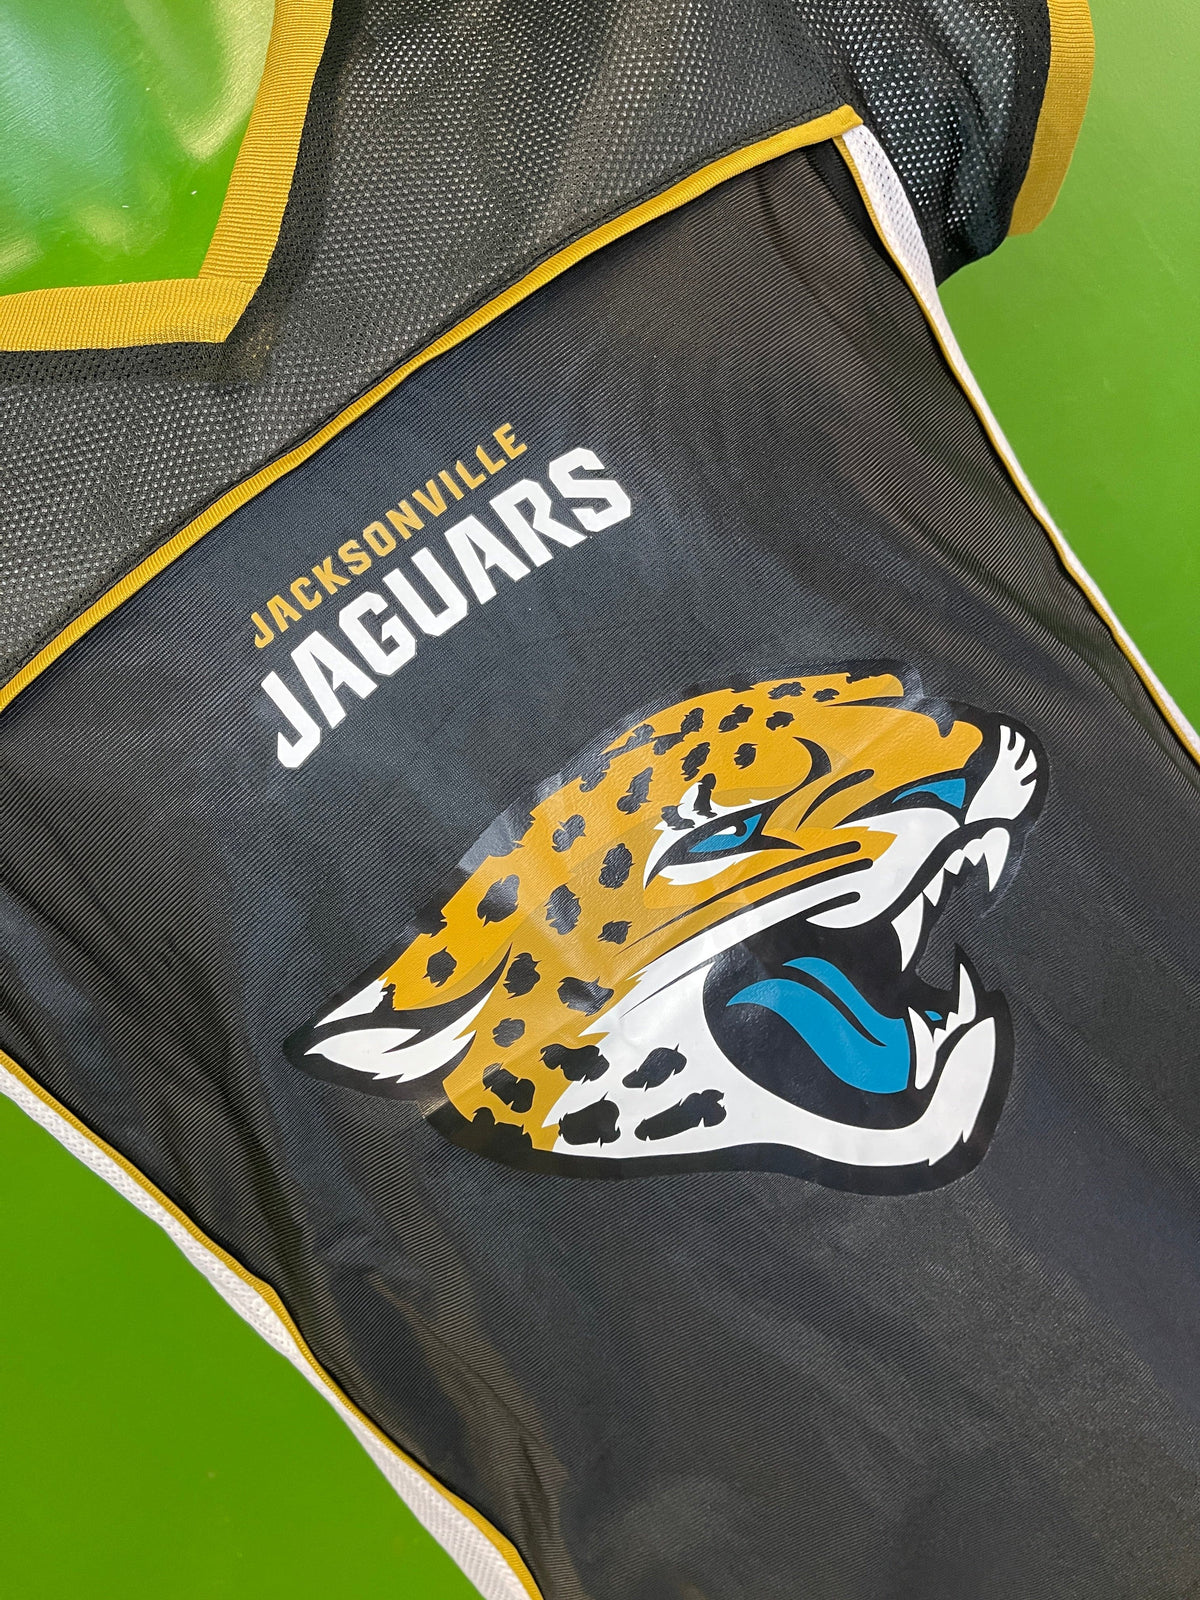 NFL Jacksonville Jaguars Authentic Kids' Flag Football Shirt Youth Medium